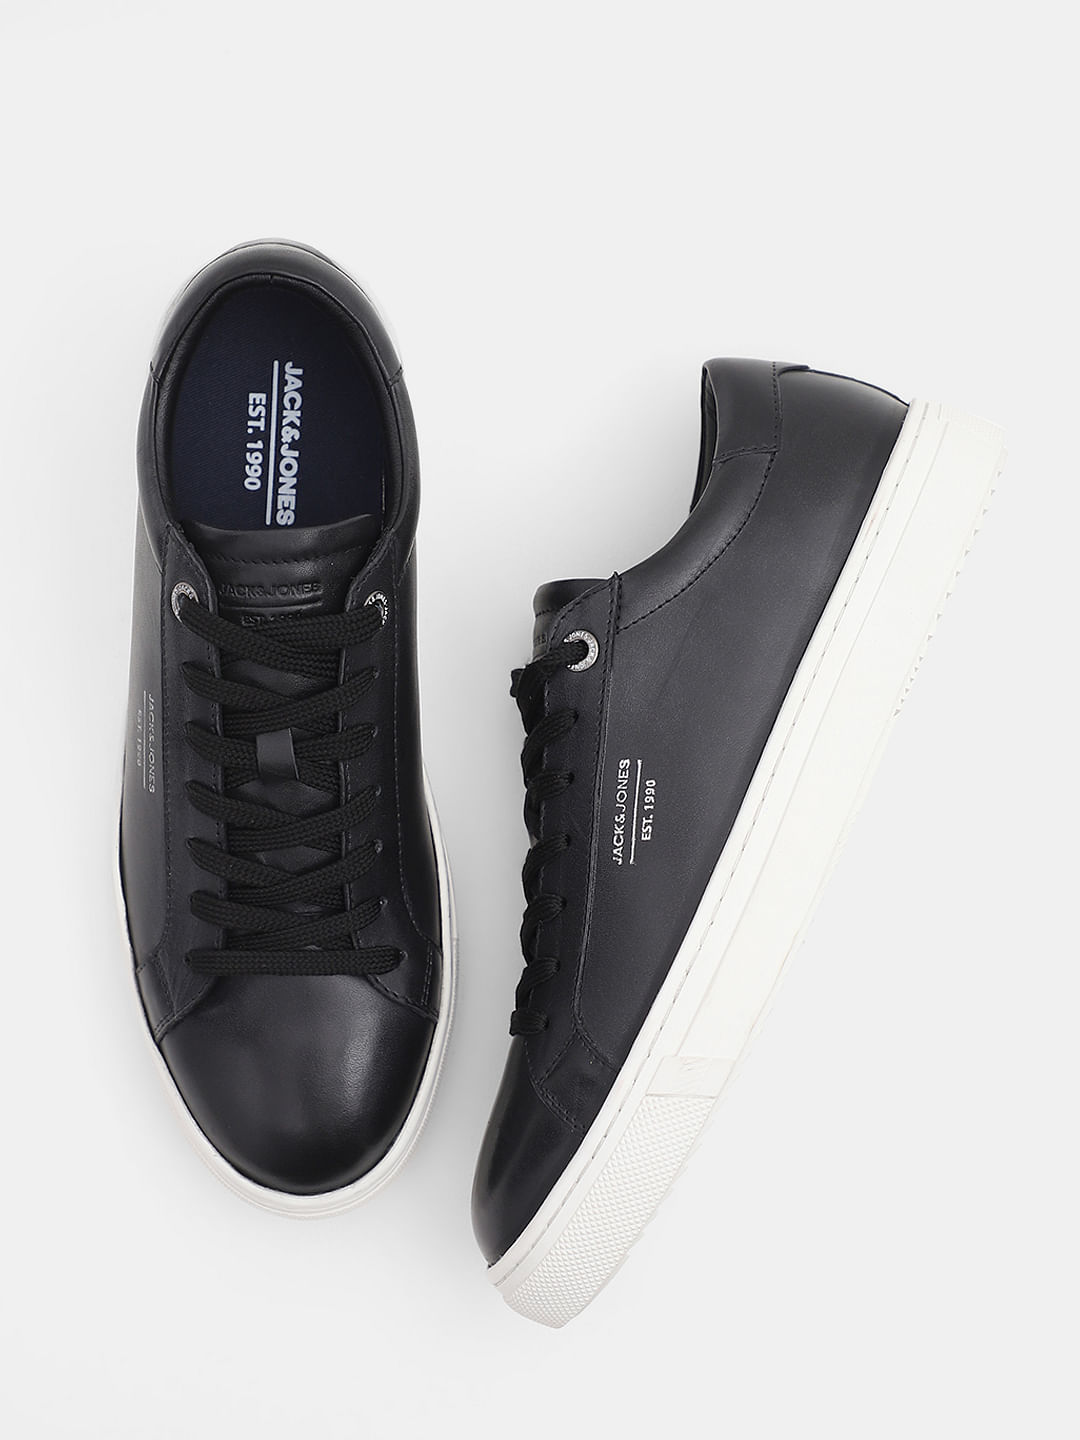 Converse Chuck 70 Hi Leather Black Monochrome Shoes Sneakers Mens 8 Womens  10 EC | eBay